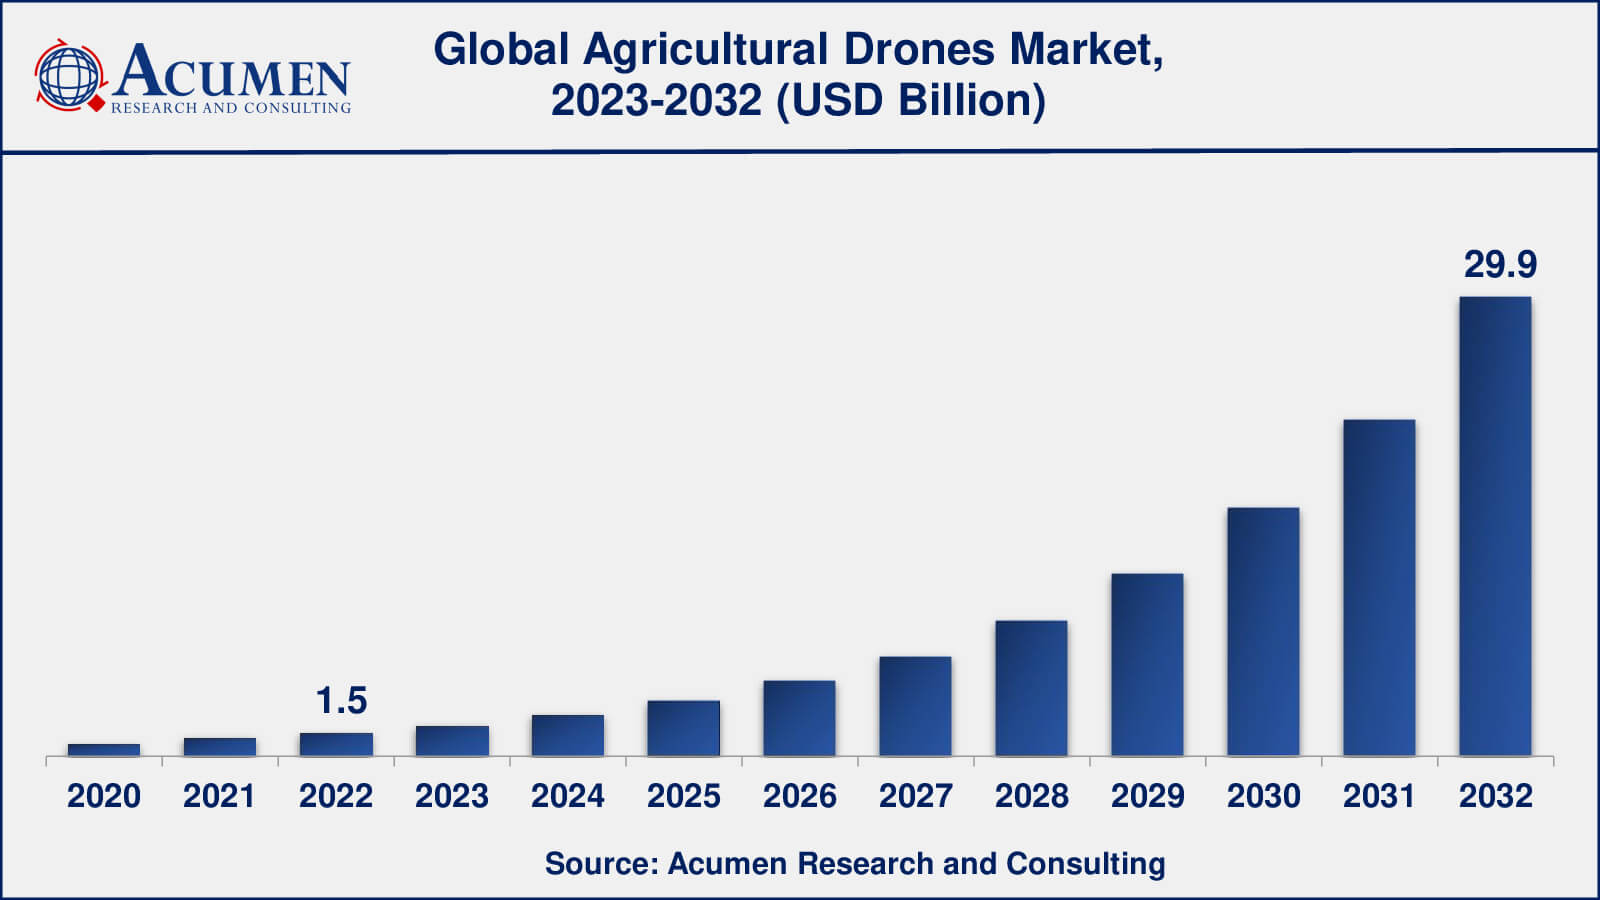 Global Agricultural Drones Market Dynamics